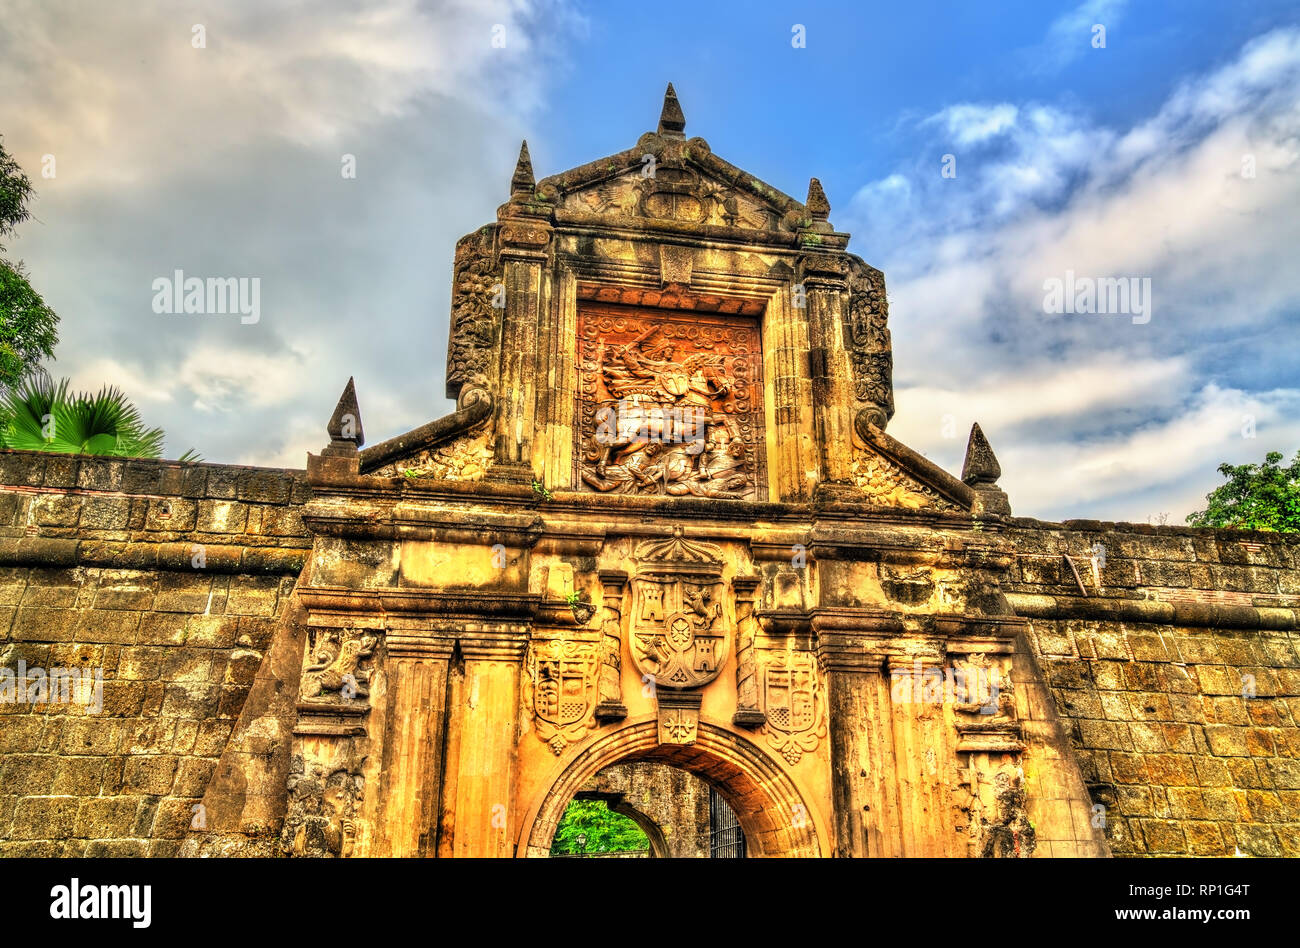 Gate of Fort Santiago in Intramuros - Manila, Philippines Stock Photo